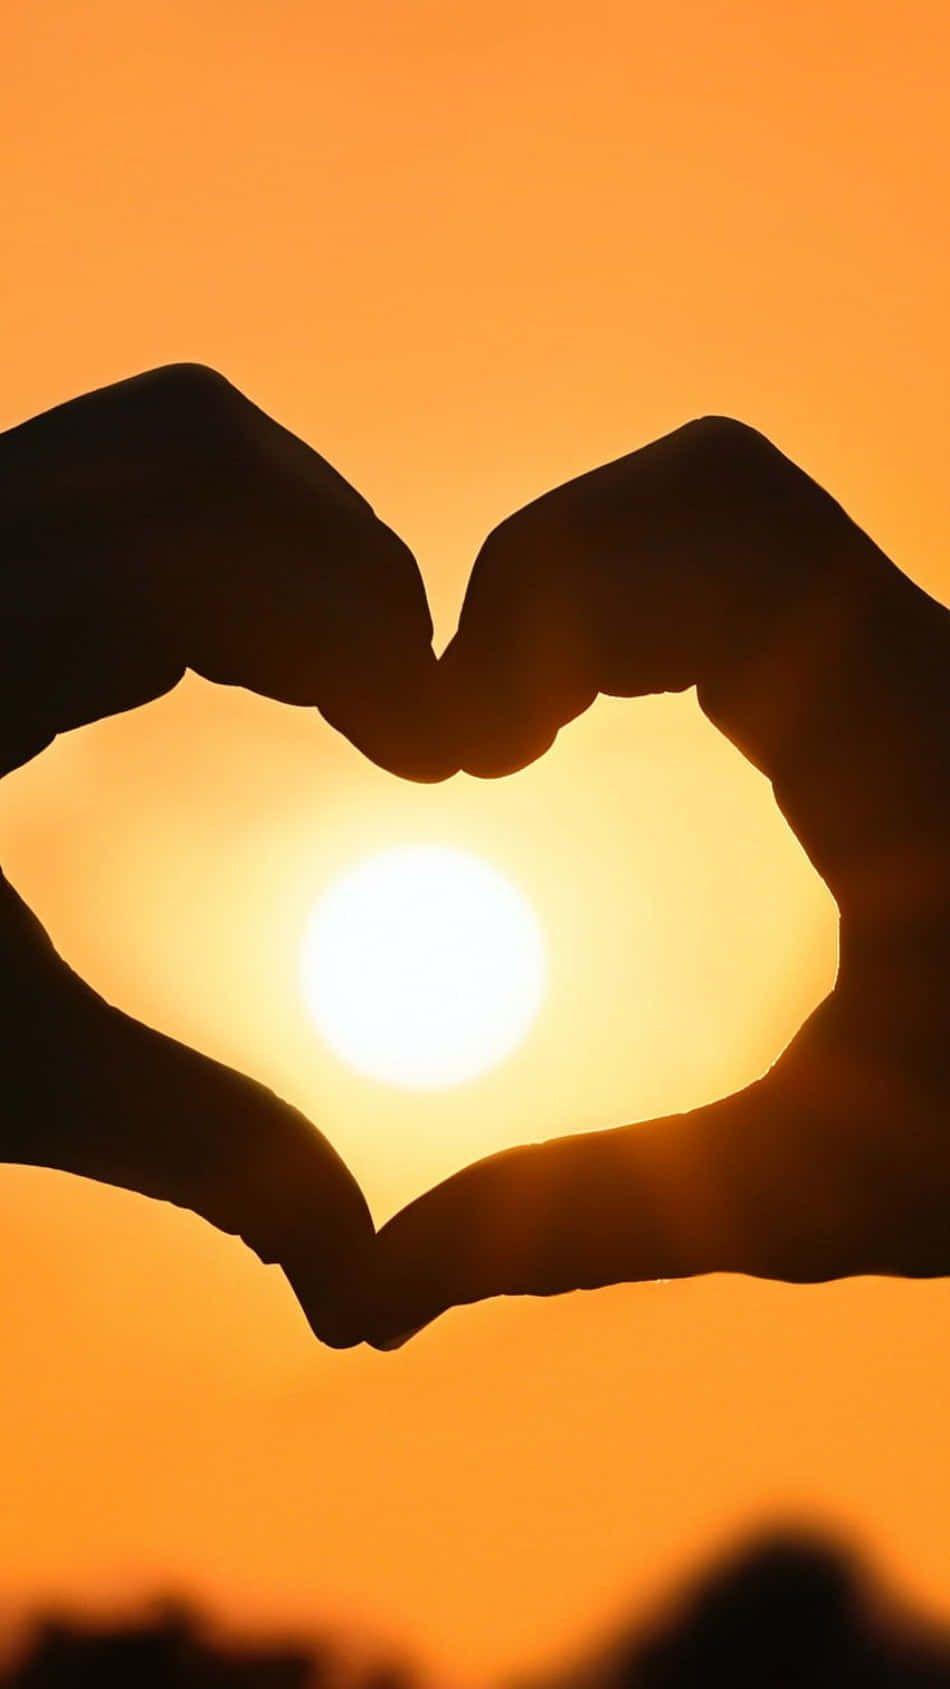 Loving Embrace: Heart Silhouette at Sunset Wallpaper